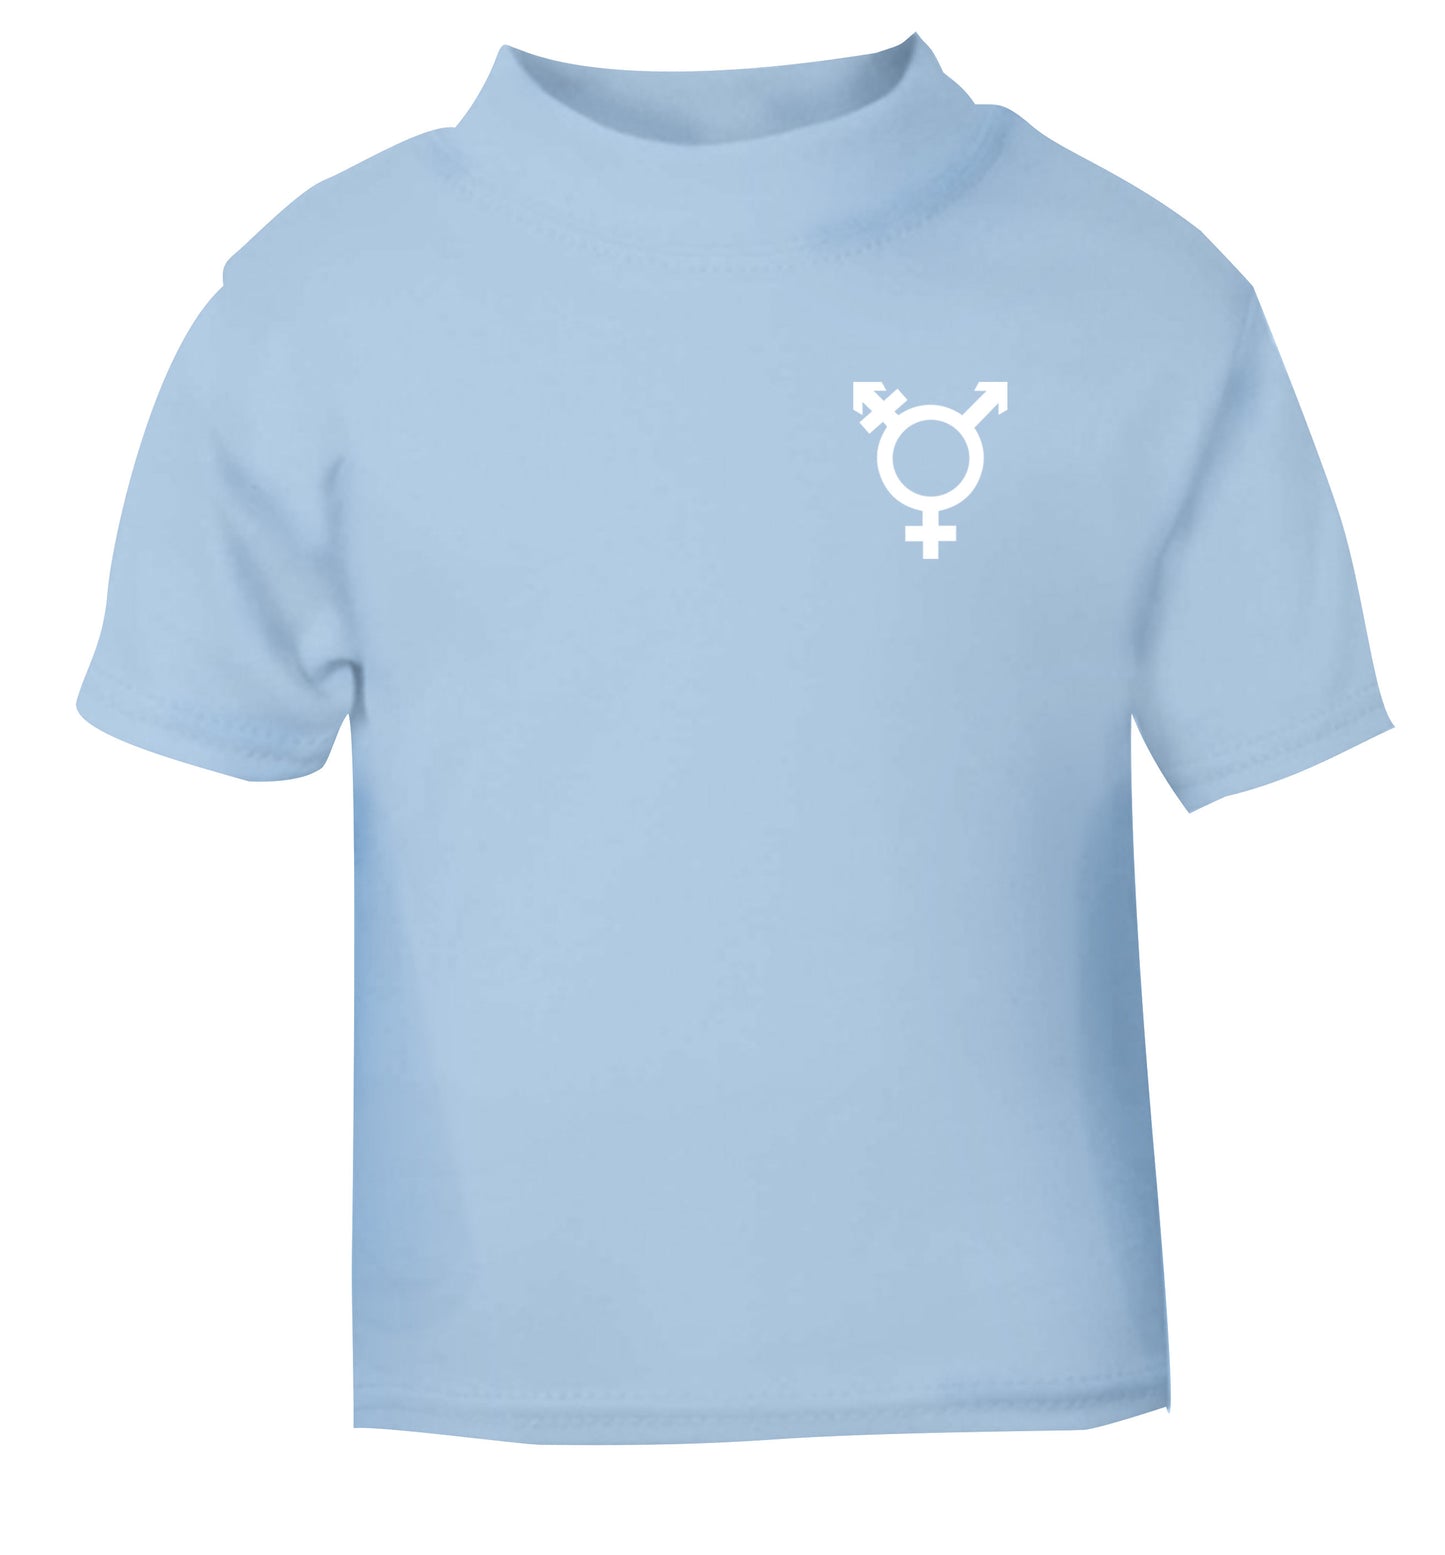 Trans gender symbol pocket light blue Baby Toddler Tshirt 2 Years